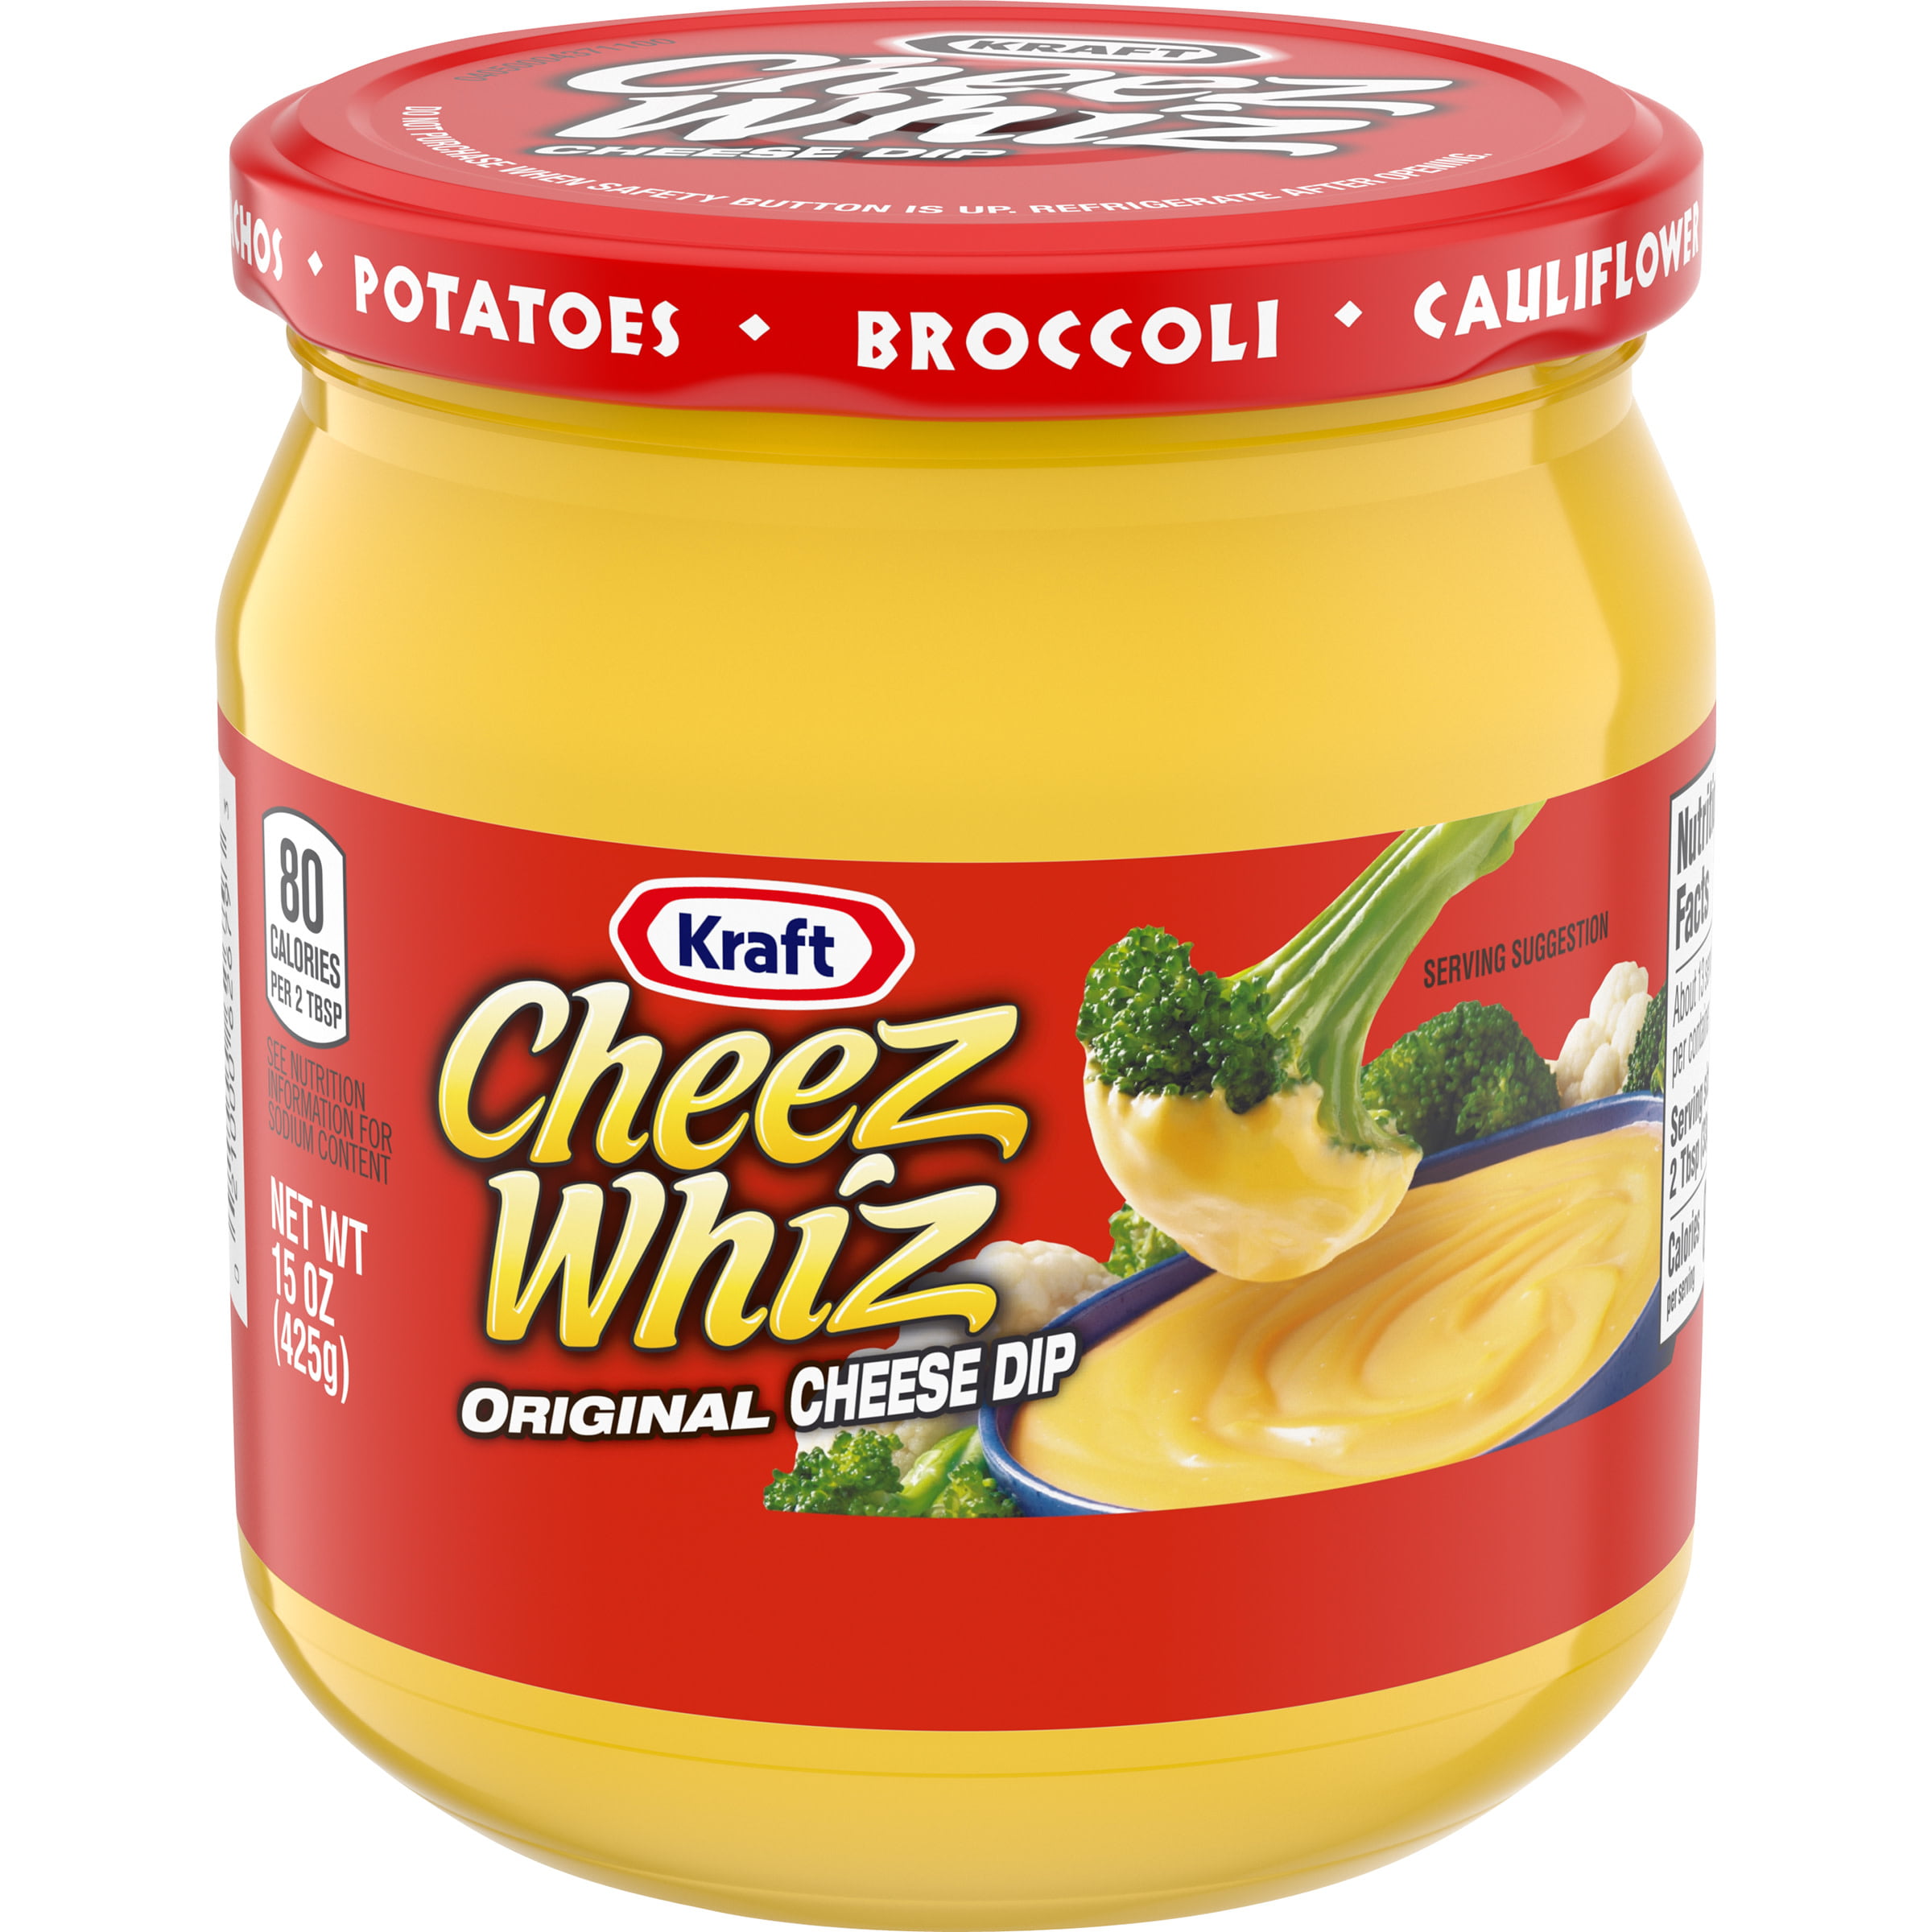 Cheez Whiz Original Cheese Dip 15 Oz Jar Walmart Com Walmart Com